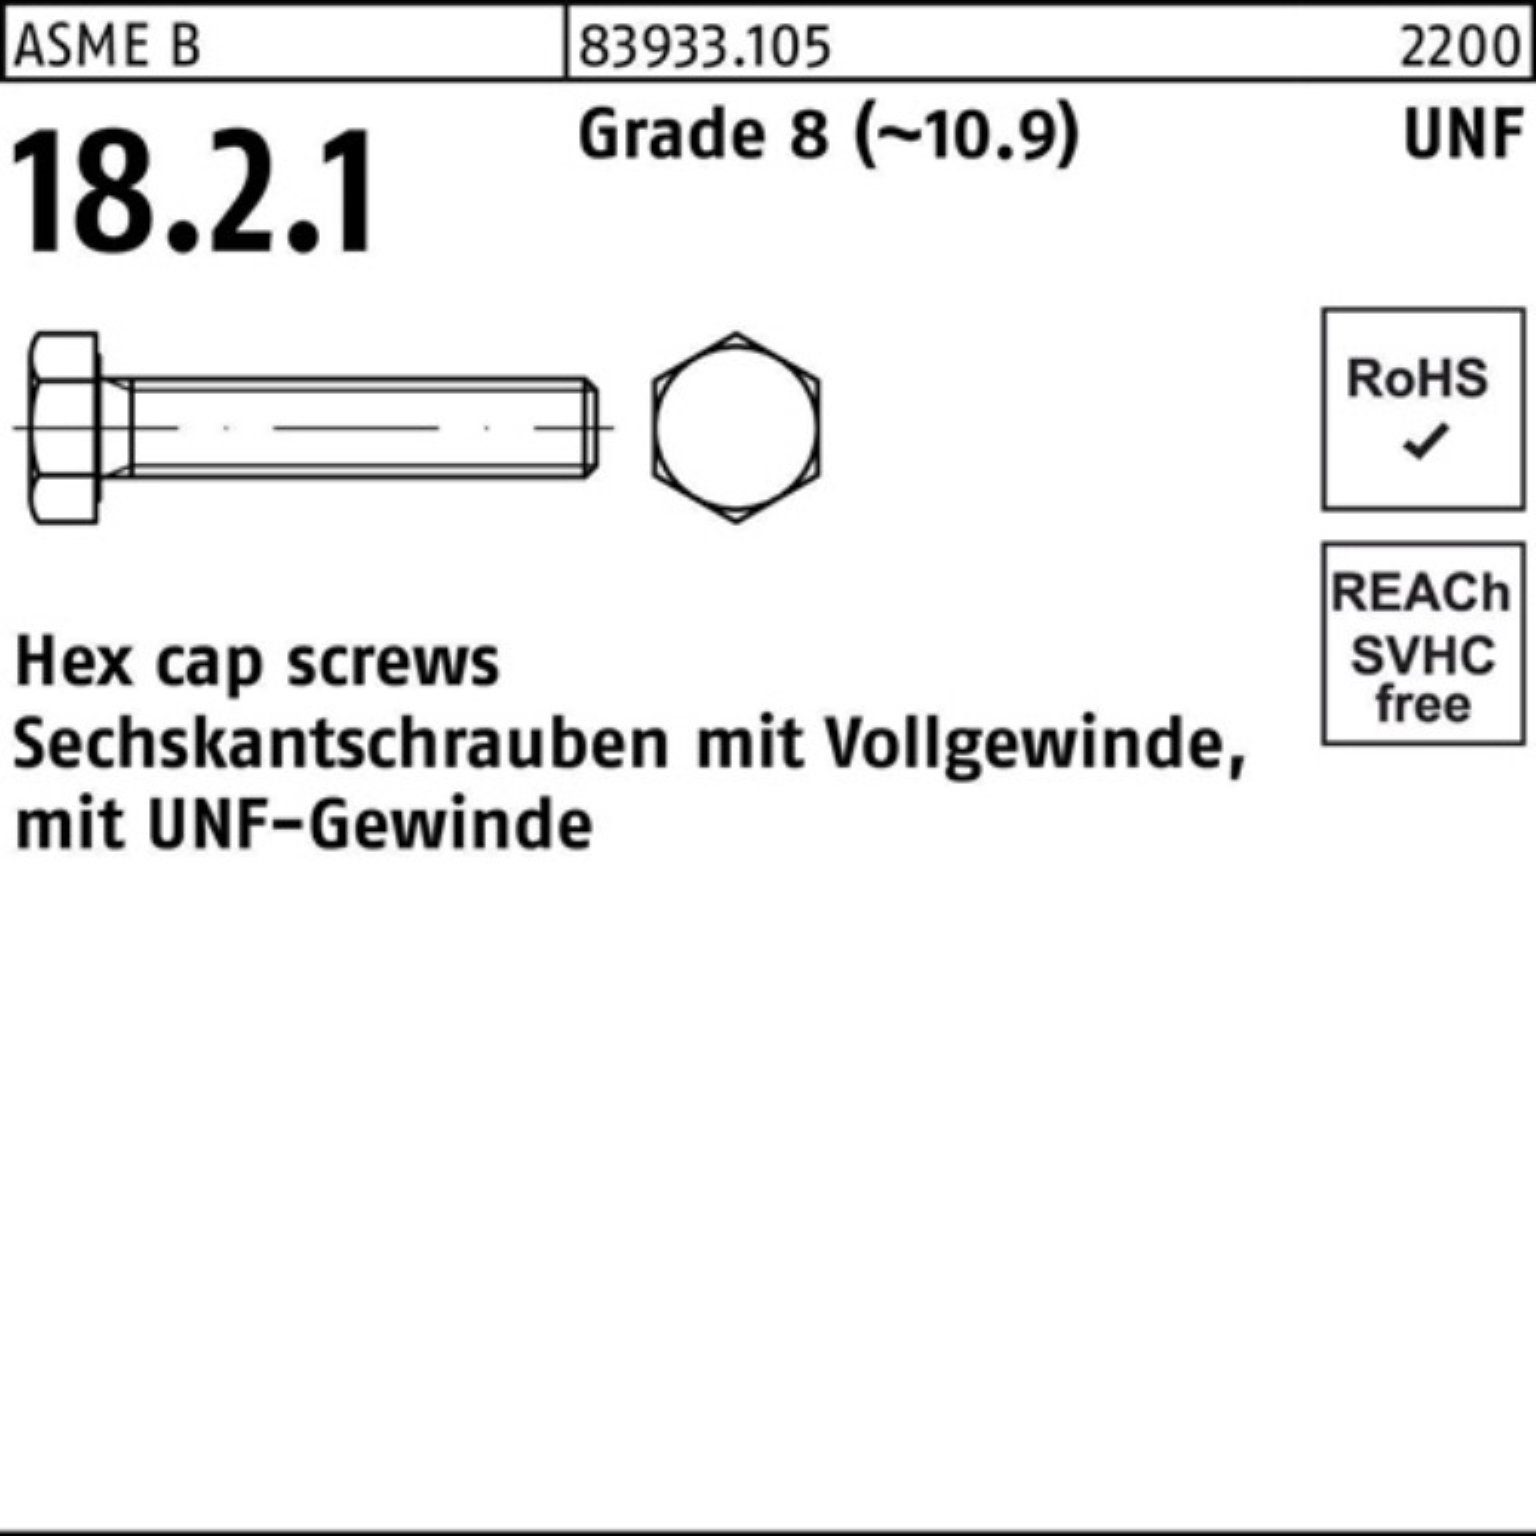 Reyher Sechskantschraube 100er Pack Sechskantschraube R 83933 UNF-Gewinde VG 1/2x 7/8 Grade 8